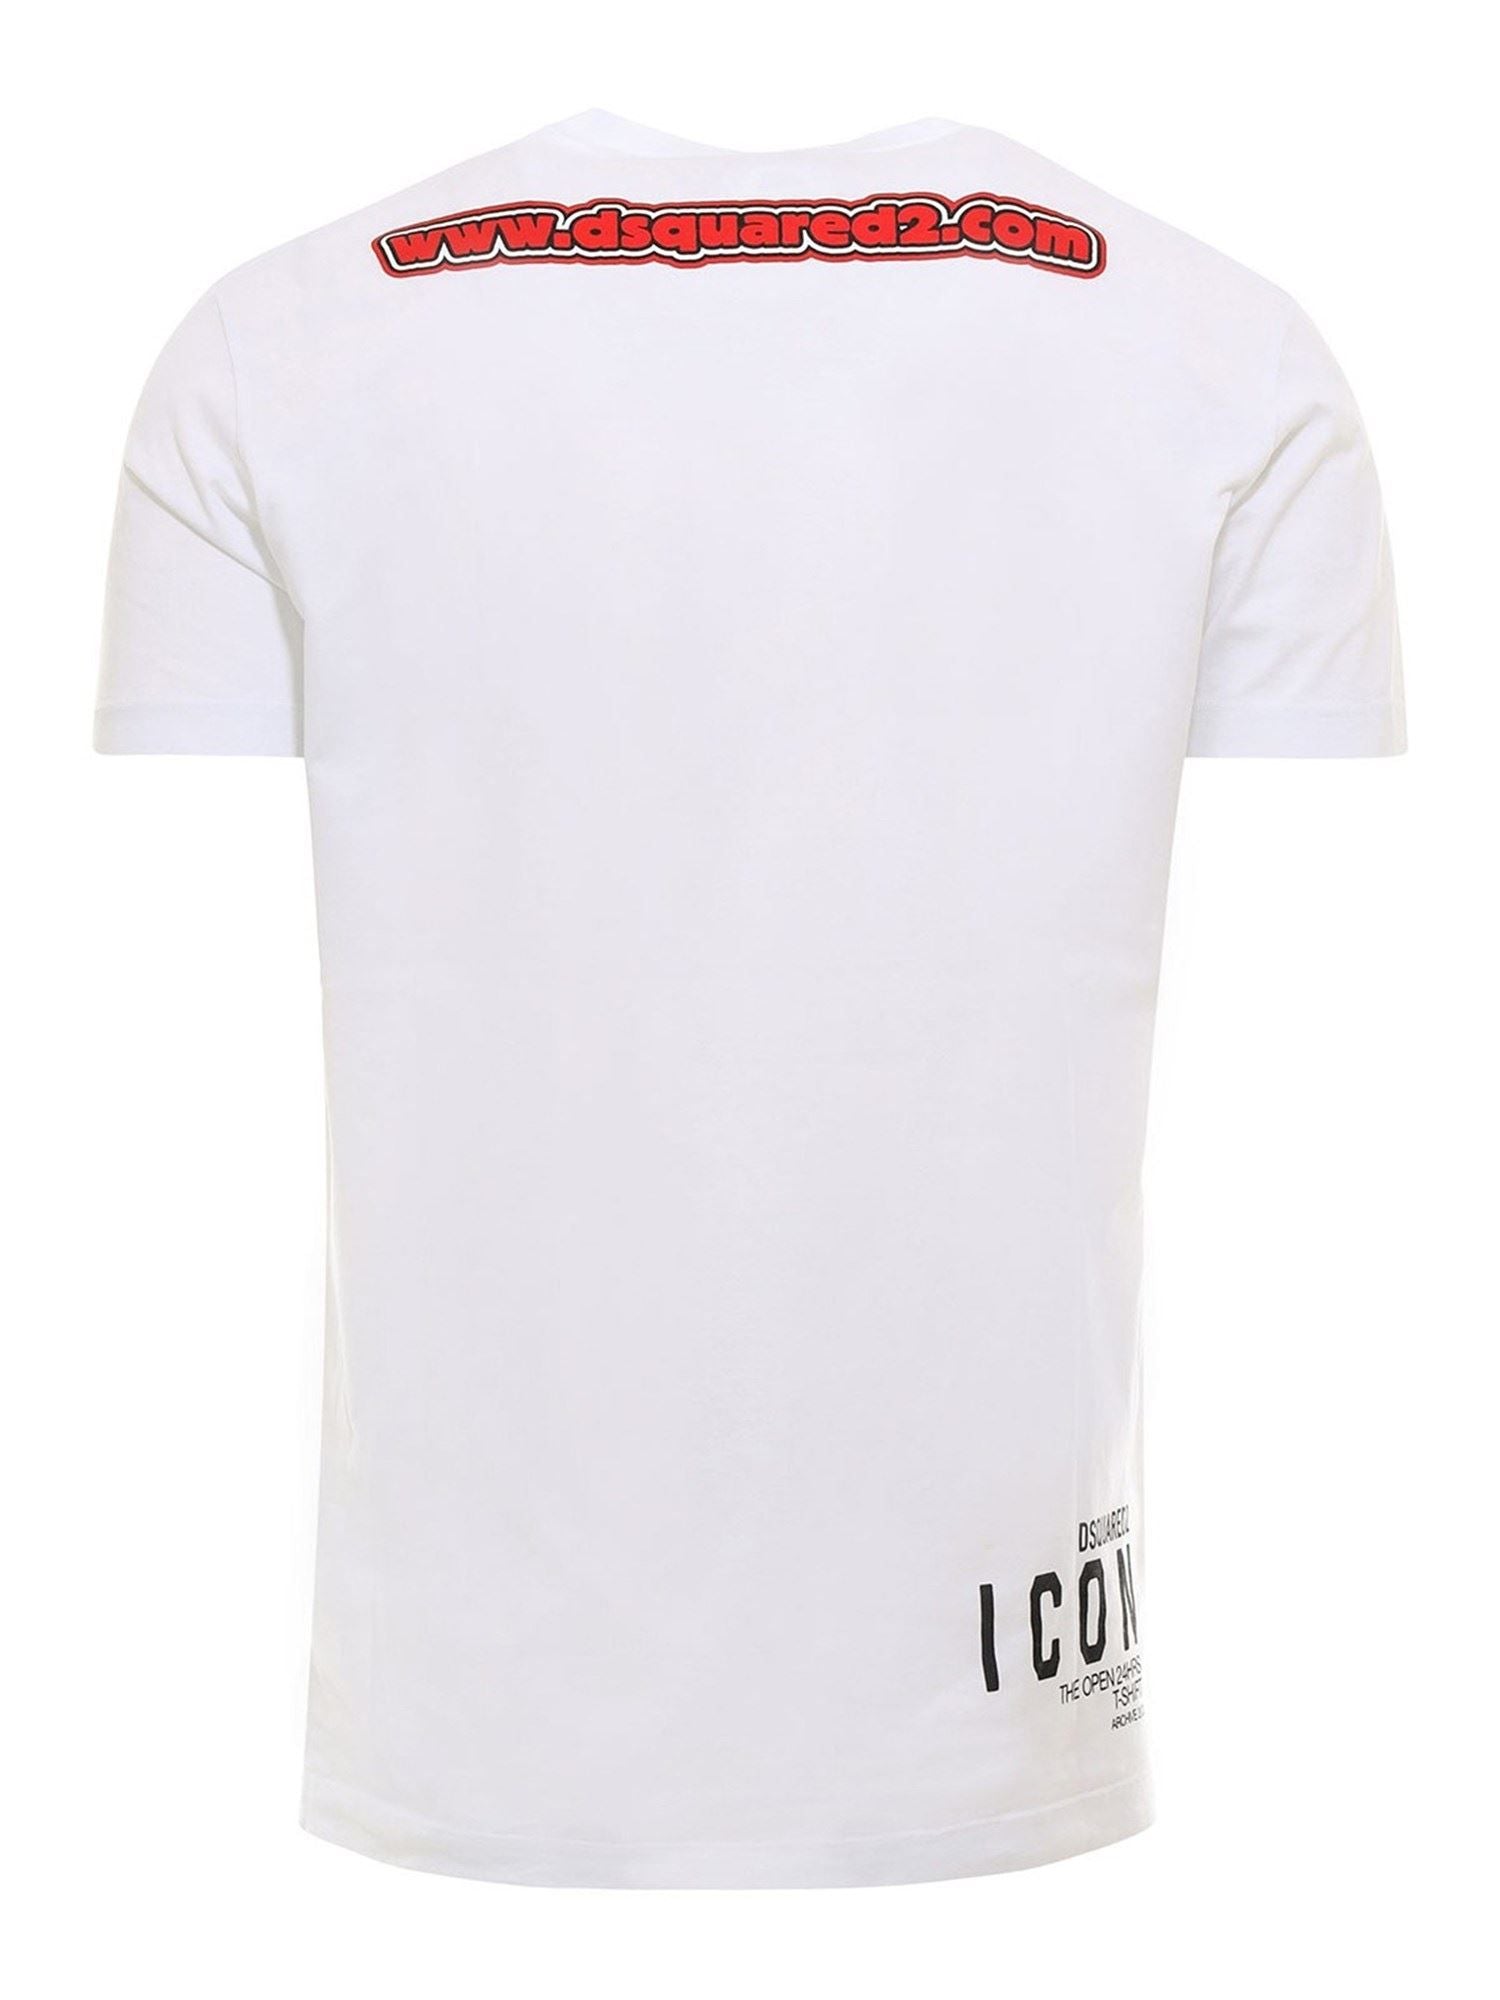 Fashionsarah.com Fashionsarah.com Dsquared² White Cotton T-Shirt